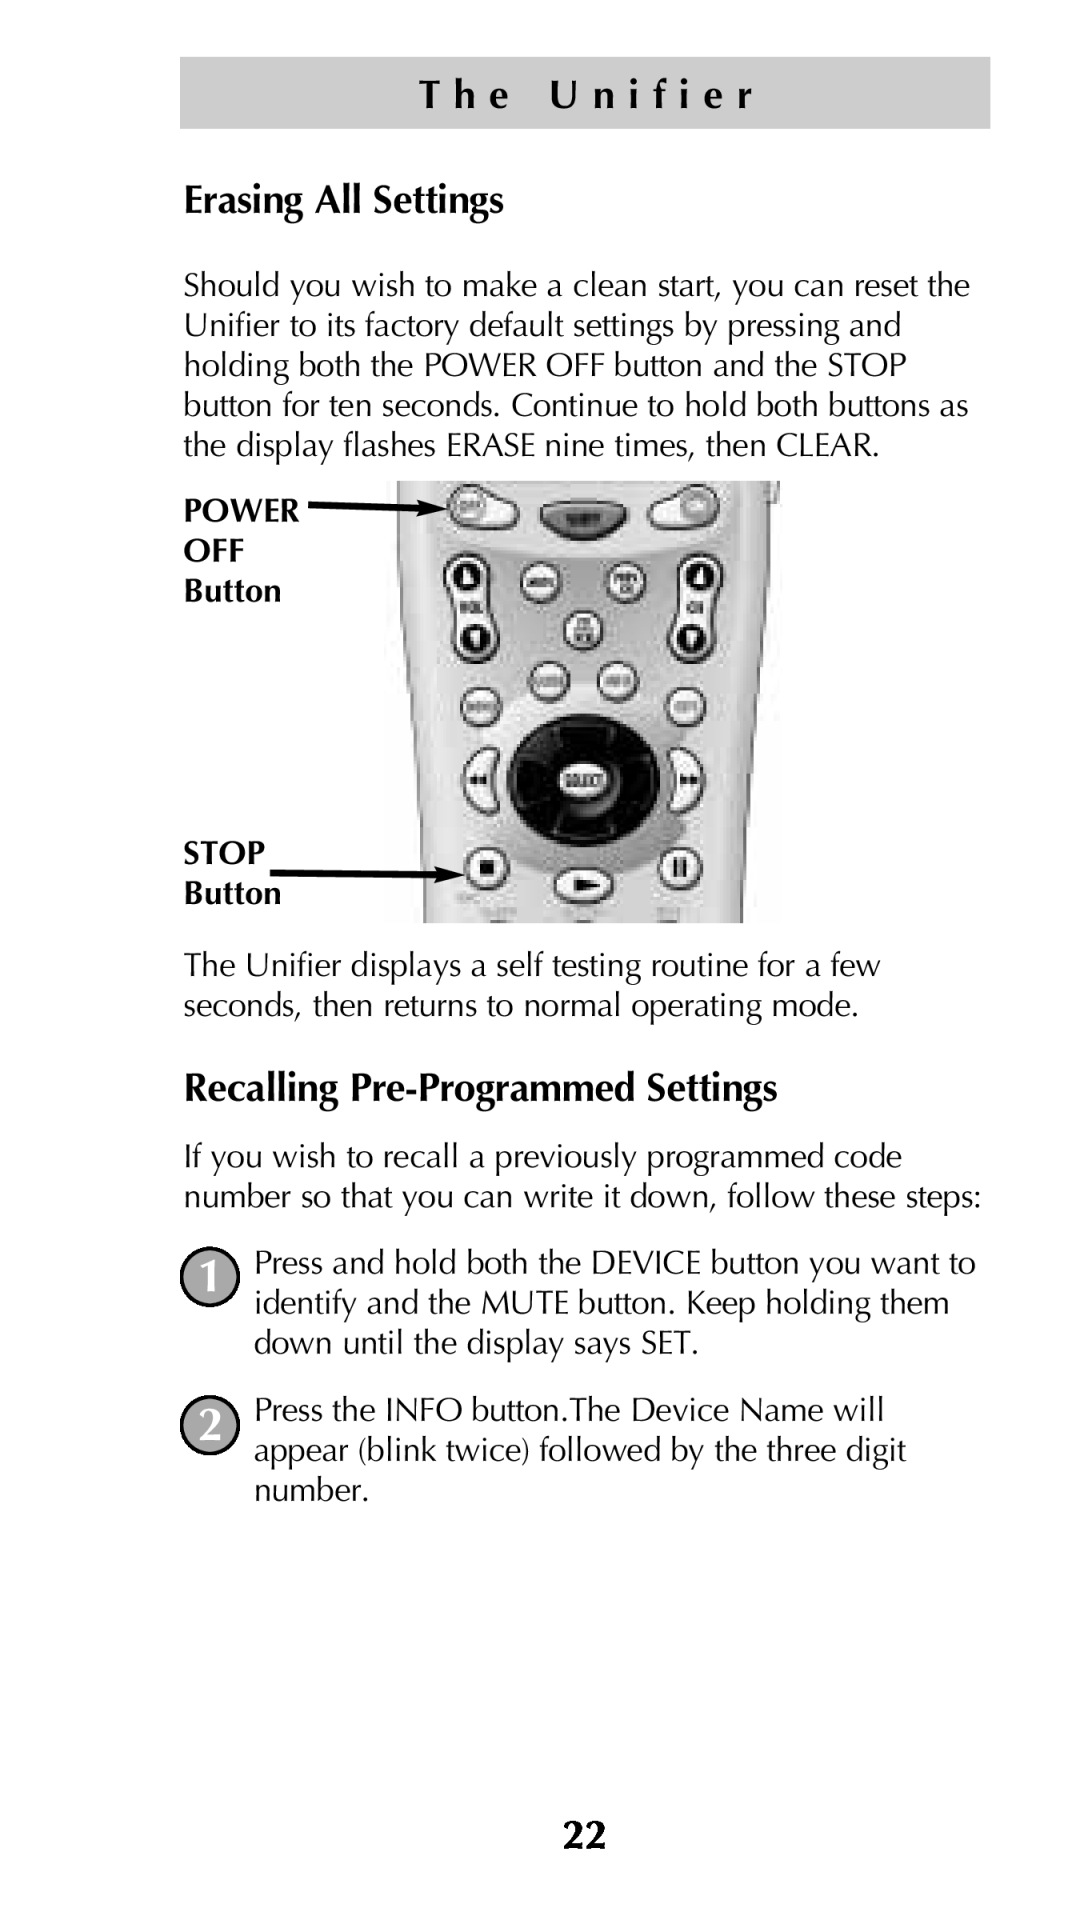 Universal Remote Control Unifier URC-100 T h e U n i f i e r Erasing All Settings, Recalling Pre-Programmed Settings 